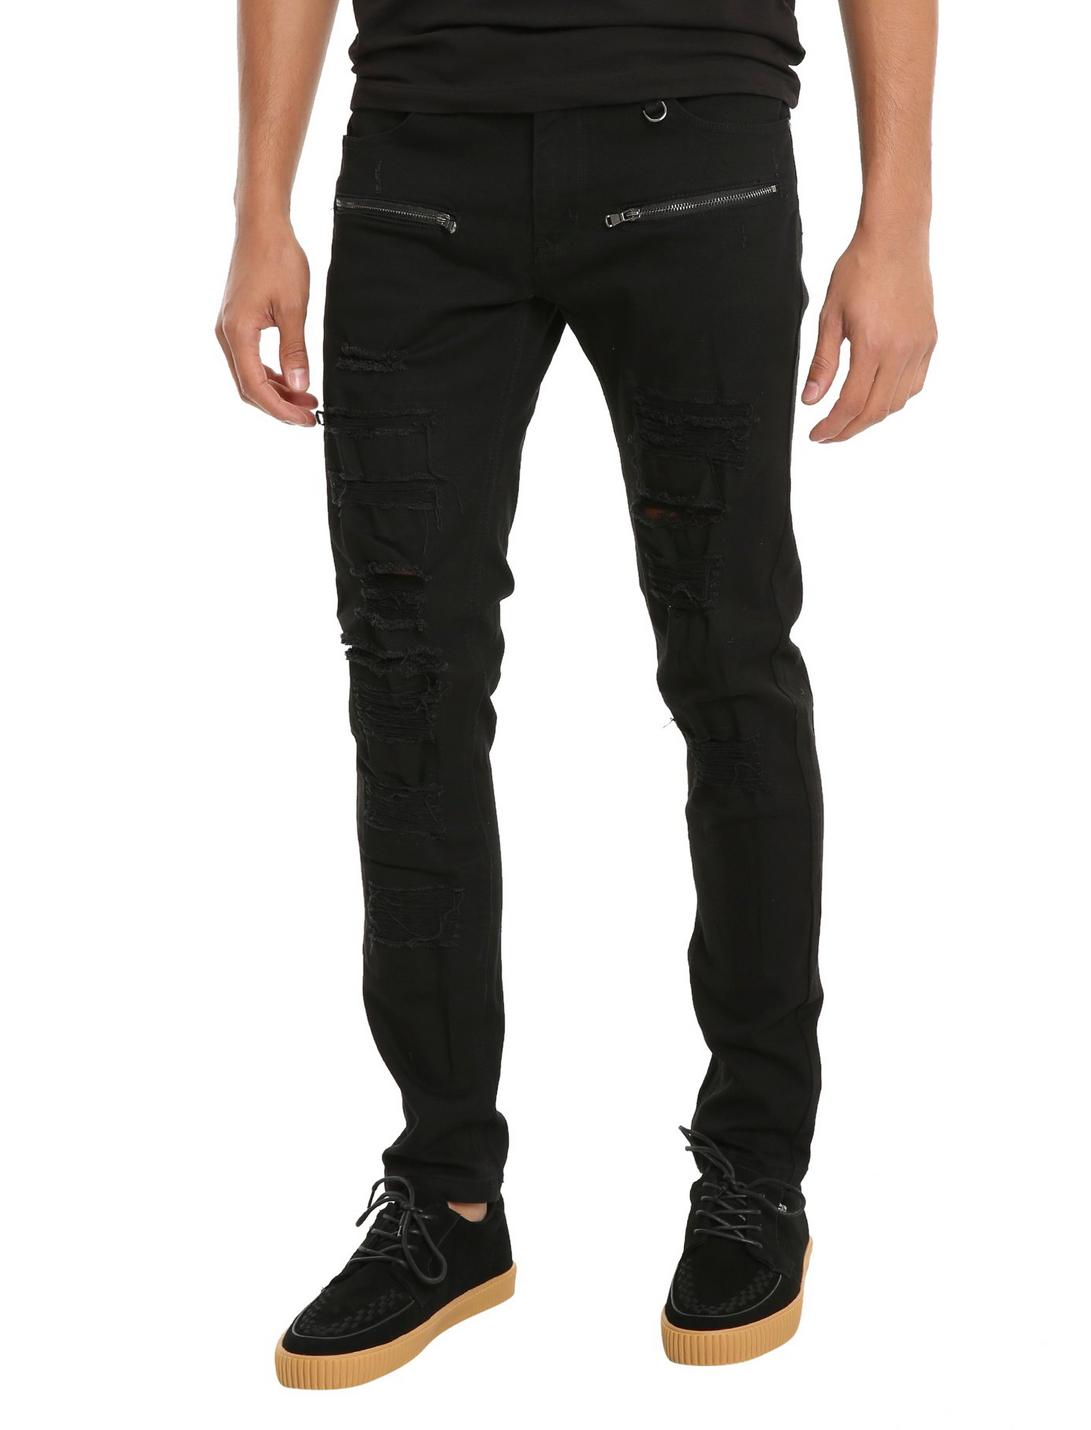 Black Zippered Skinny Jeans 32 Inch Inseam, BLACK, hi-res